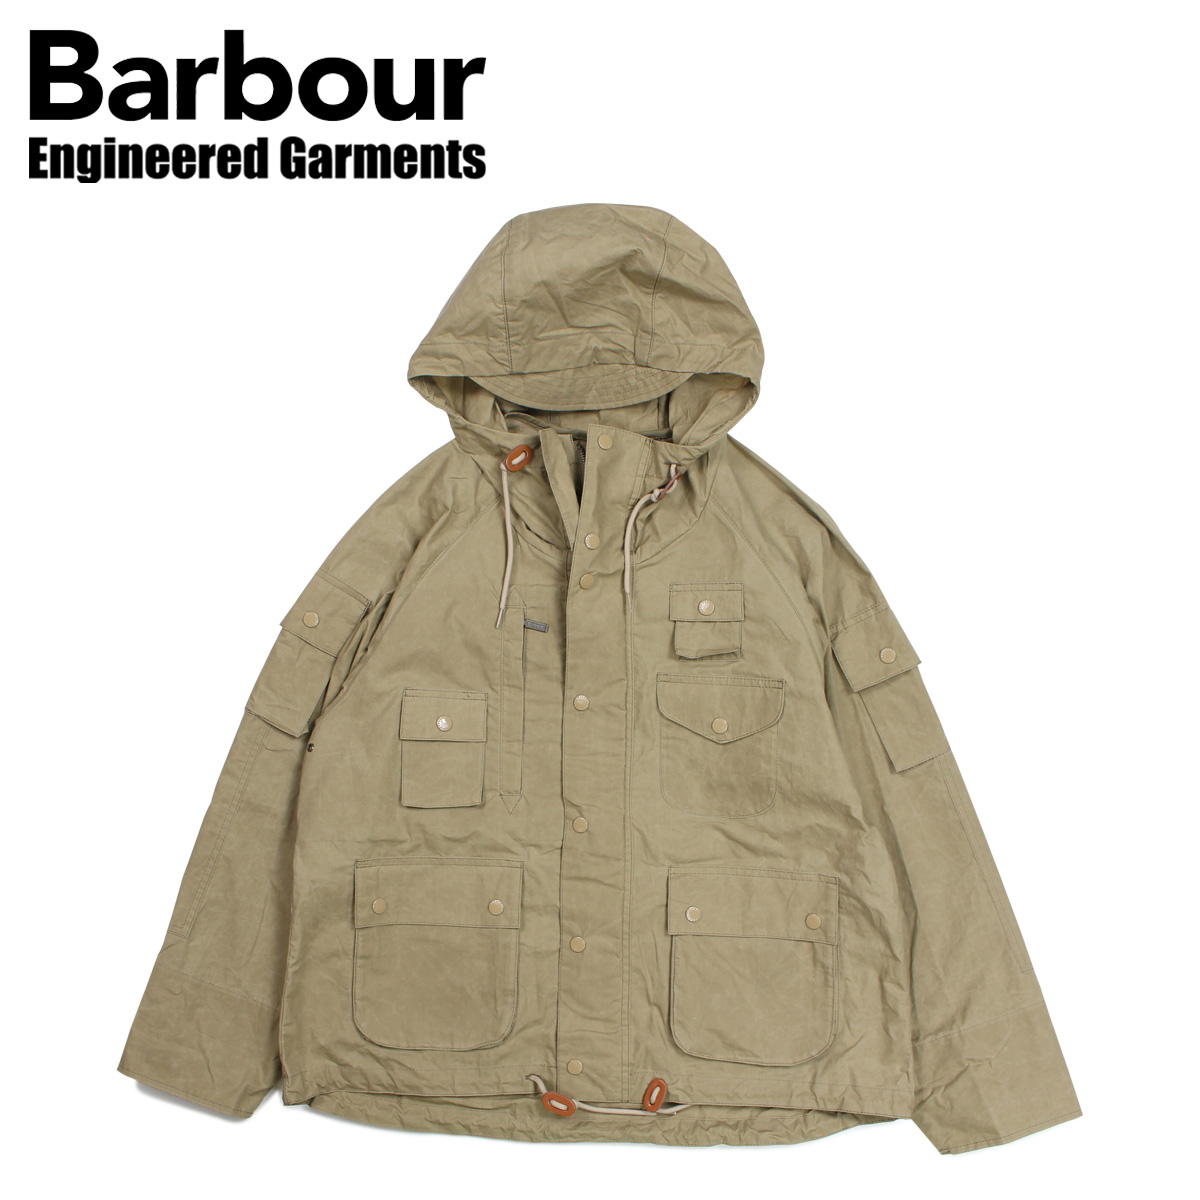 engineered garments barbour thompson jacket